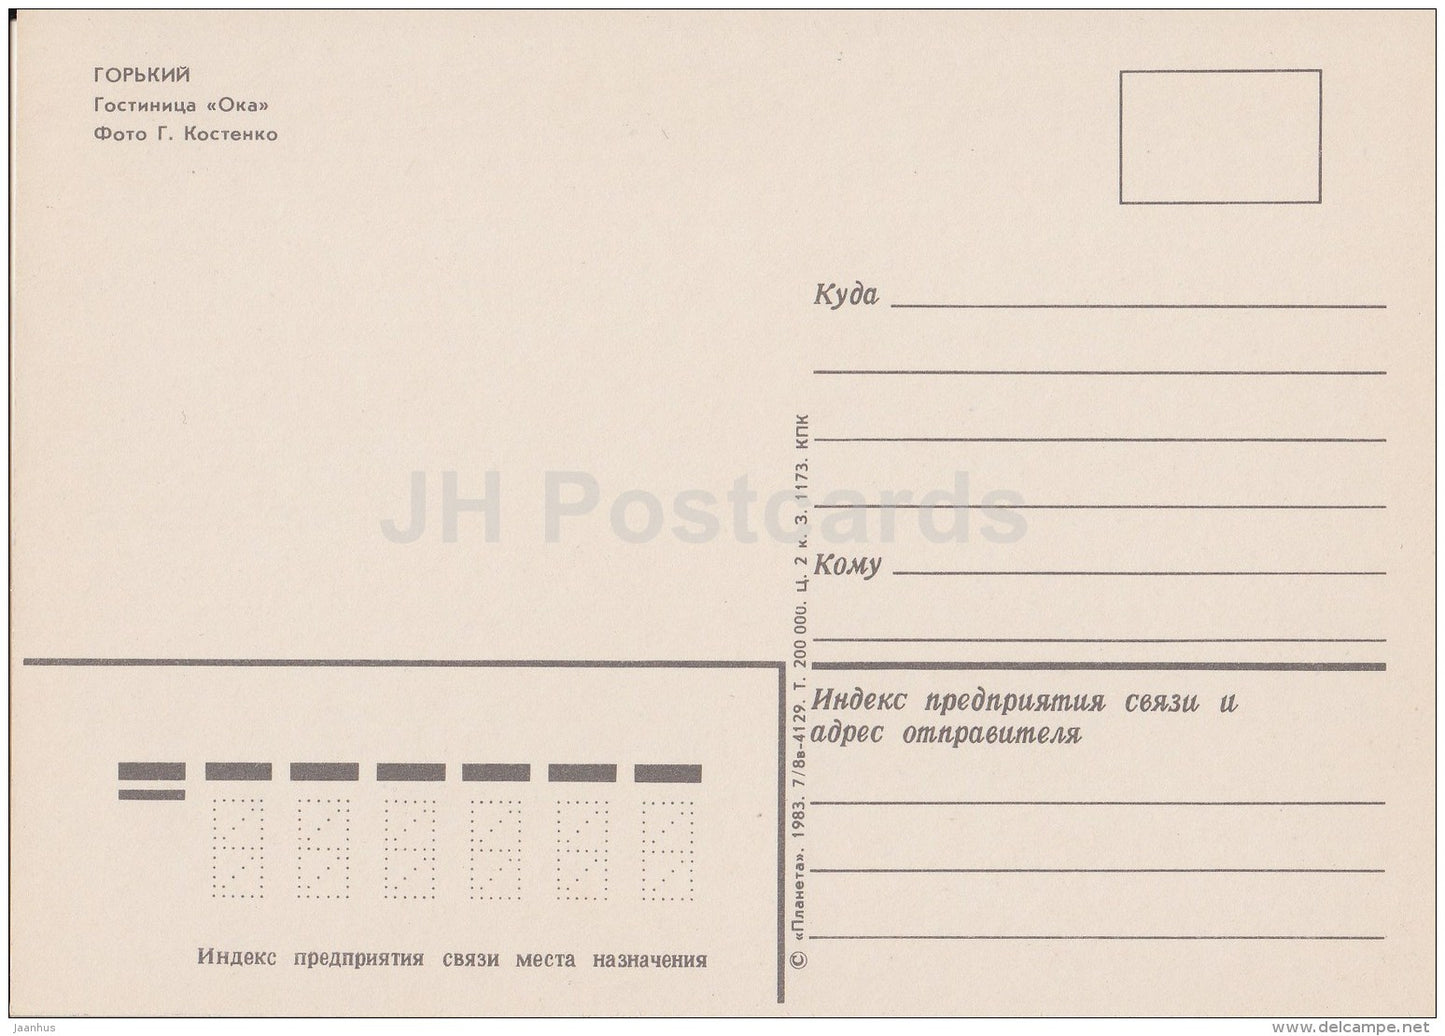 hotel Oka - Nizhny Novgorod - Gorky - 1983 - Russia USSR - unused - JH Postcards